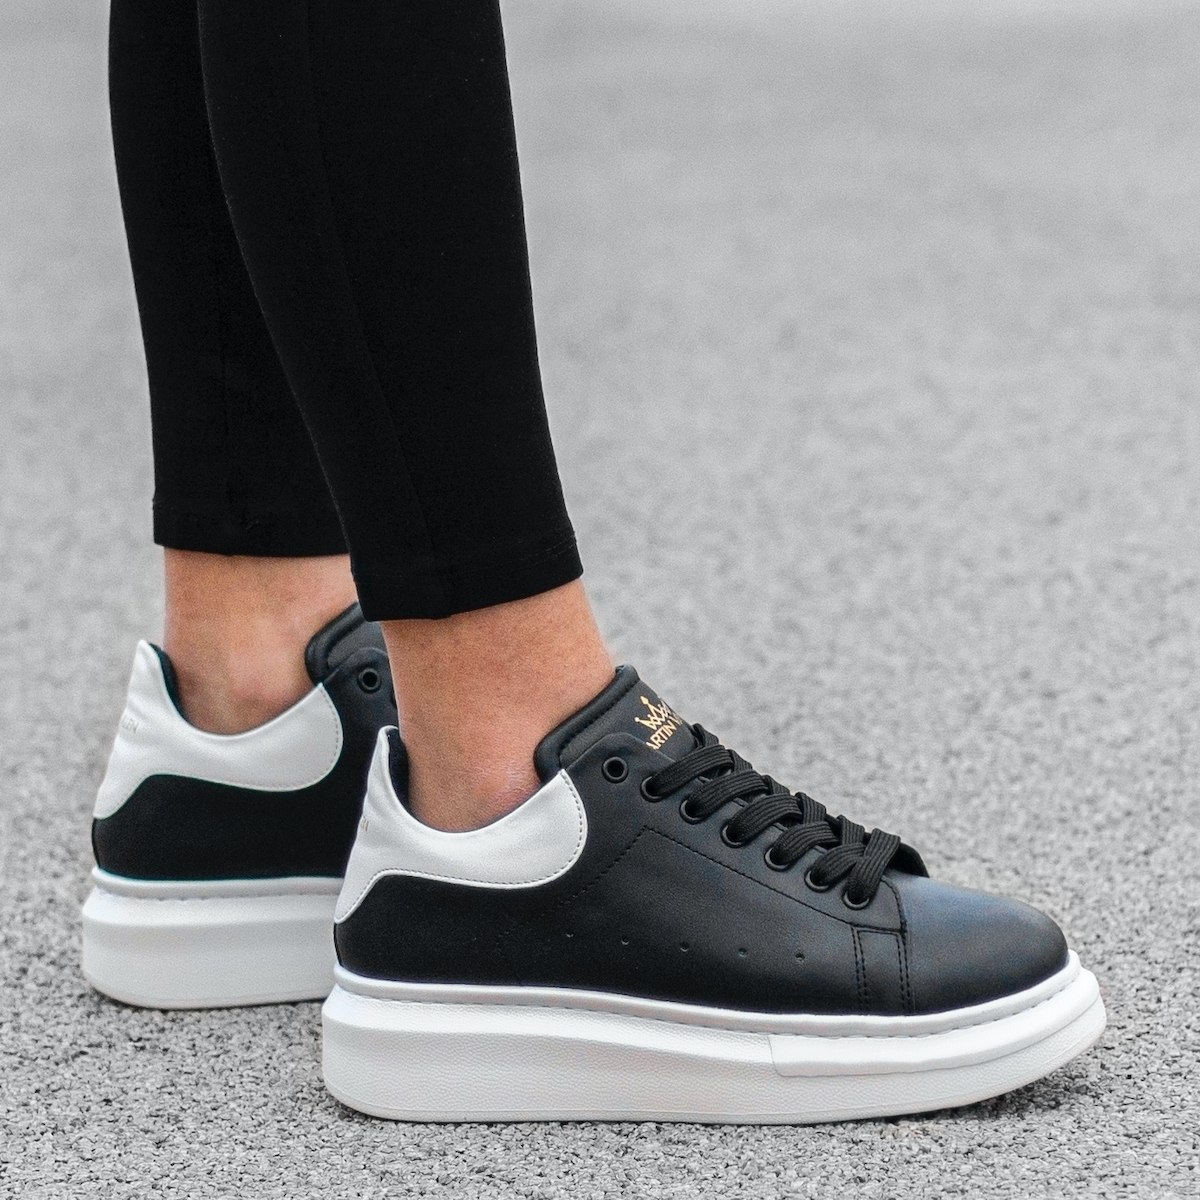 Martin Valen Women’s Chunky Sneakers in Black and White | Martin Valen